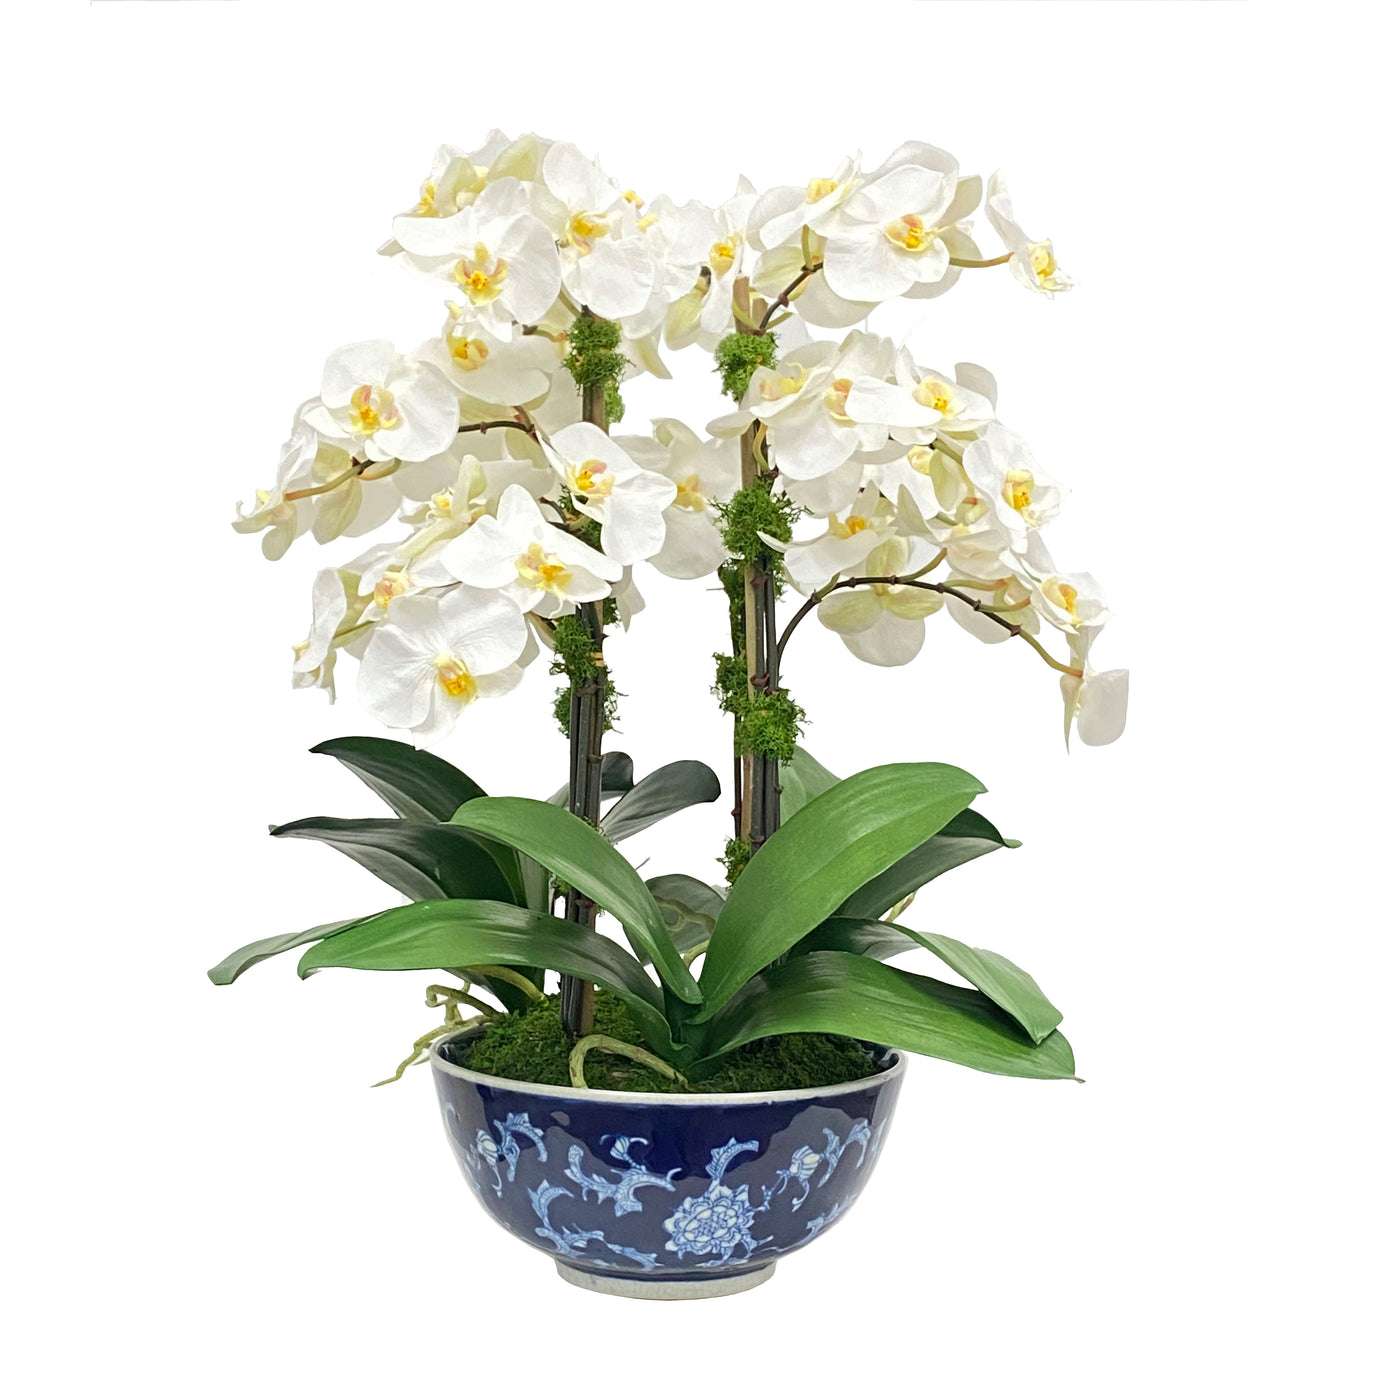 contemporary faux orchids arrangement in a classic blue and white porcelain bowl